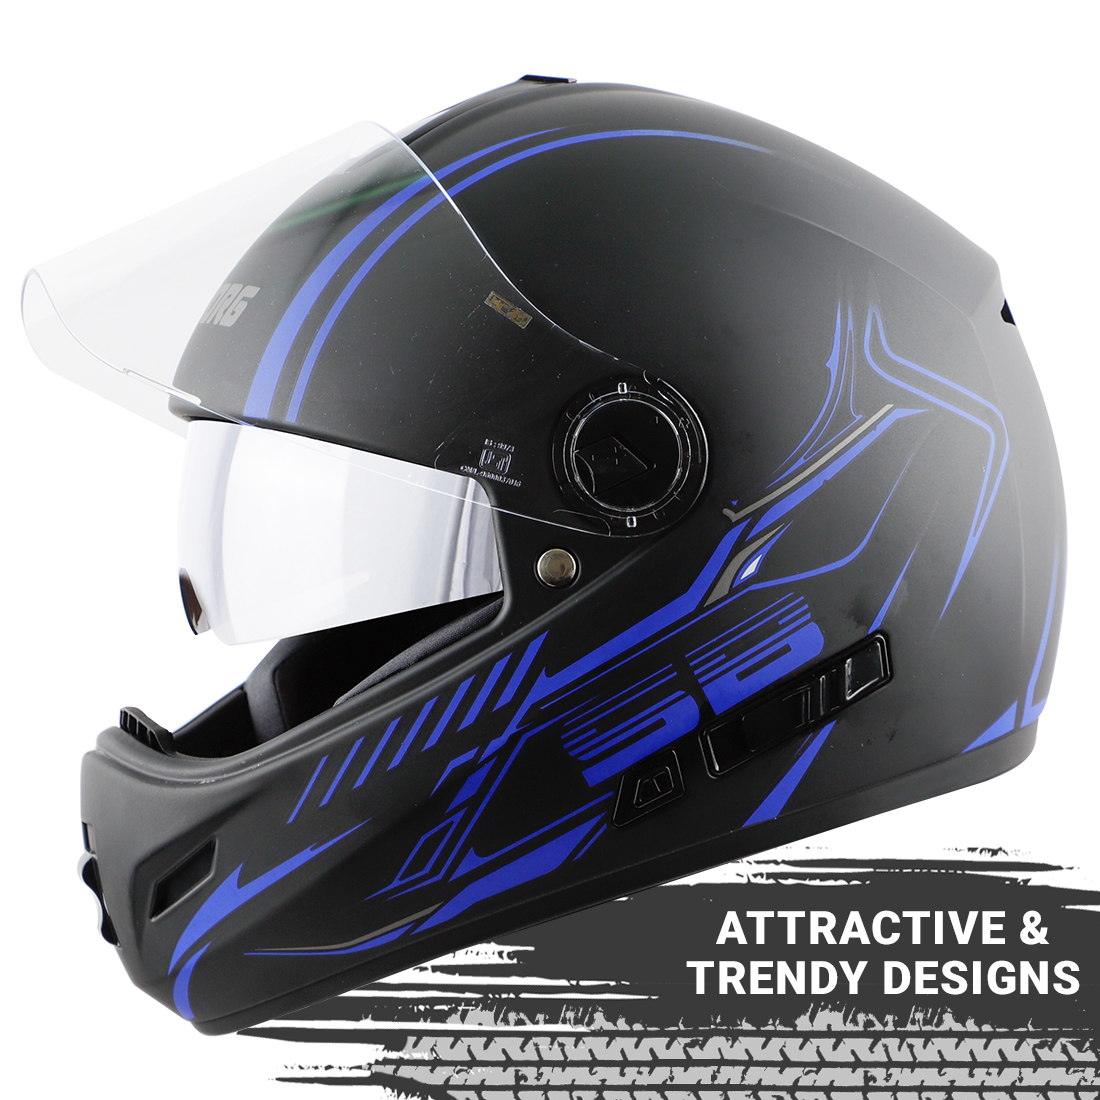 Steelbird Cyborg Cipher Full Face Helmet With Chrome Silver Sun Shield, ISI Certified Helmet (Glossy Black Blue)